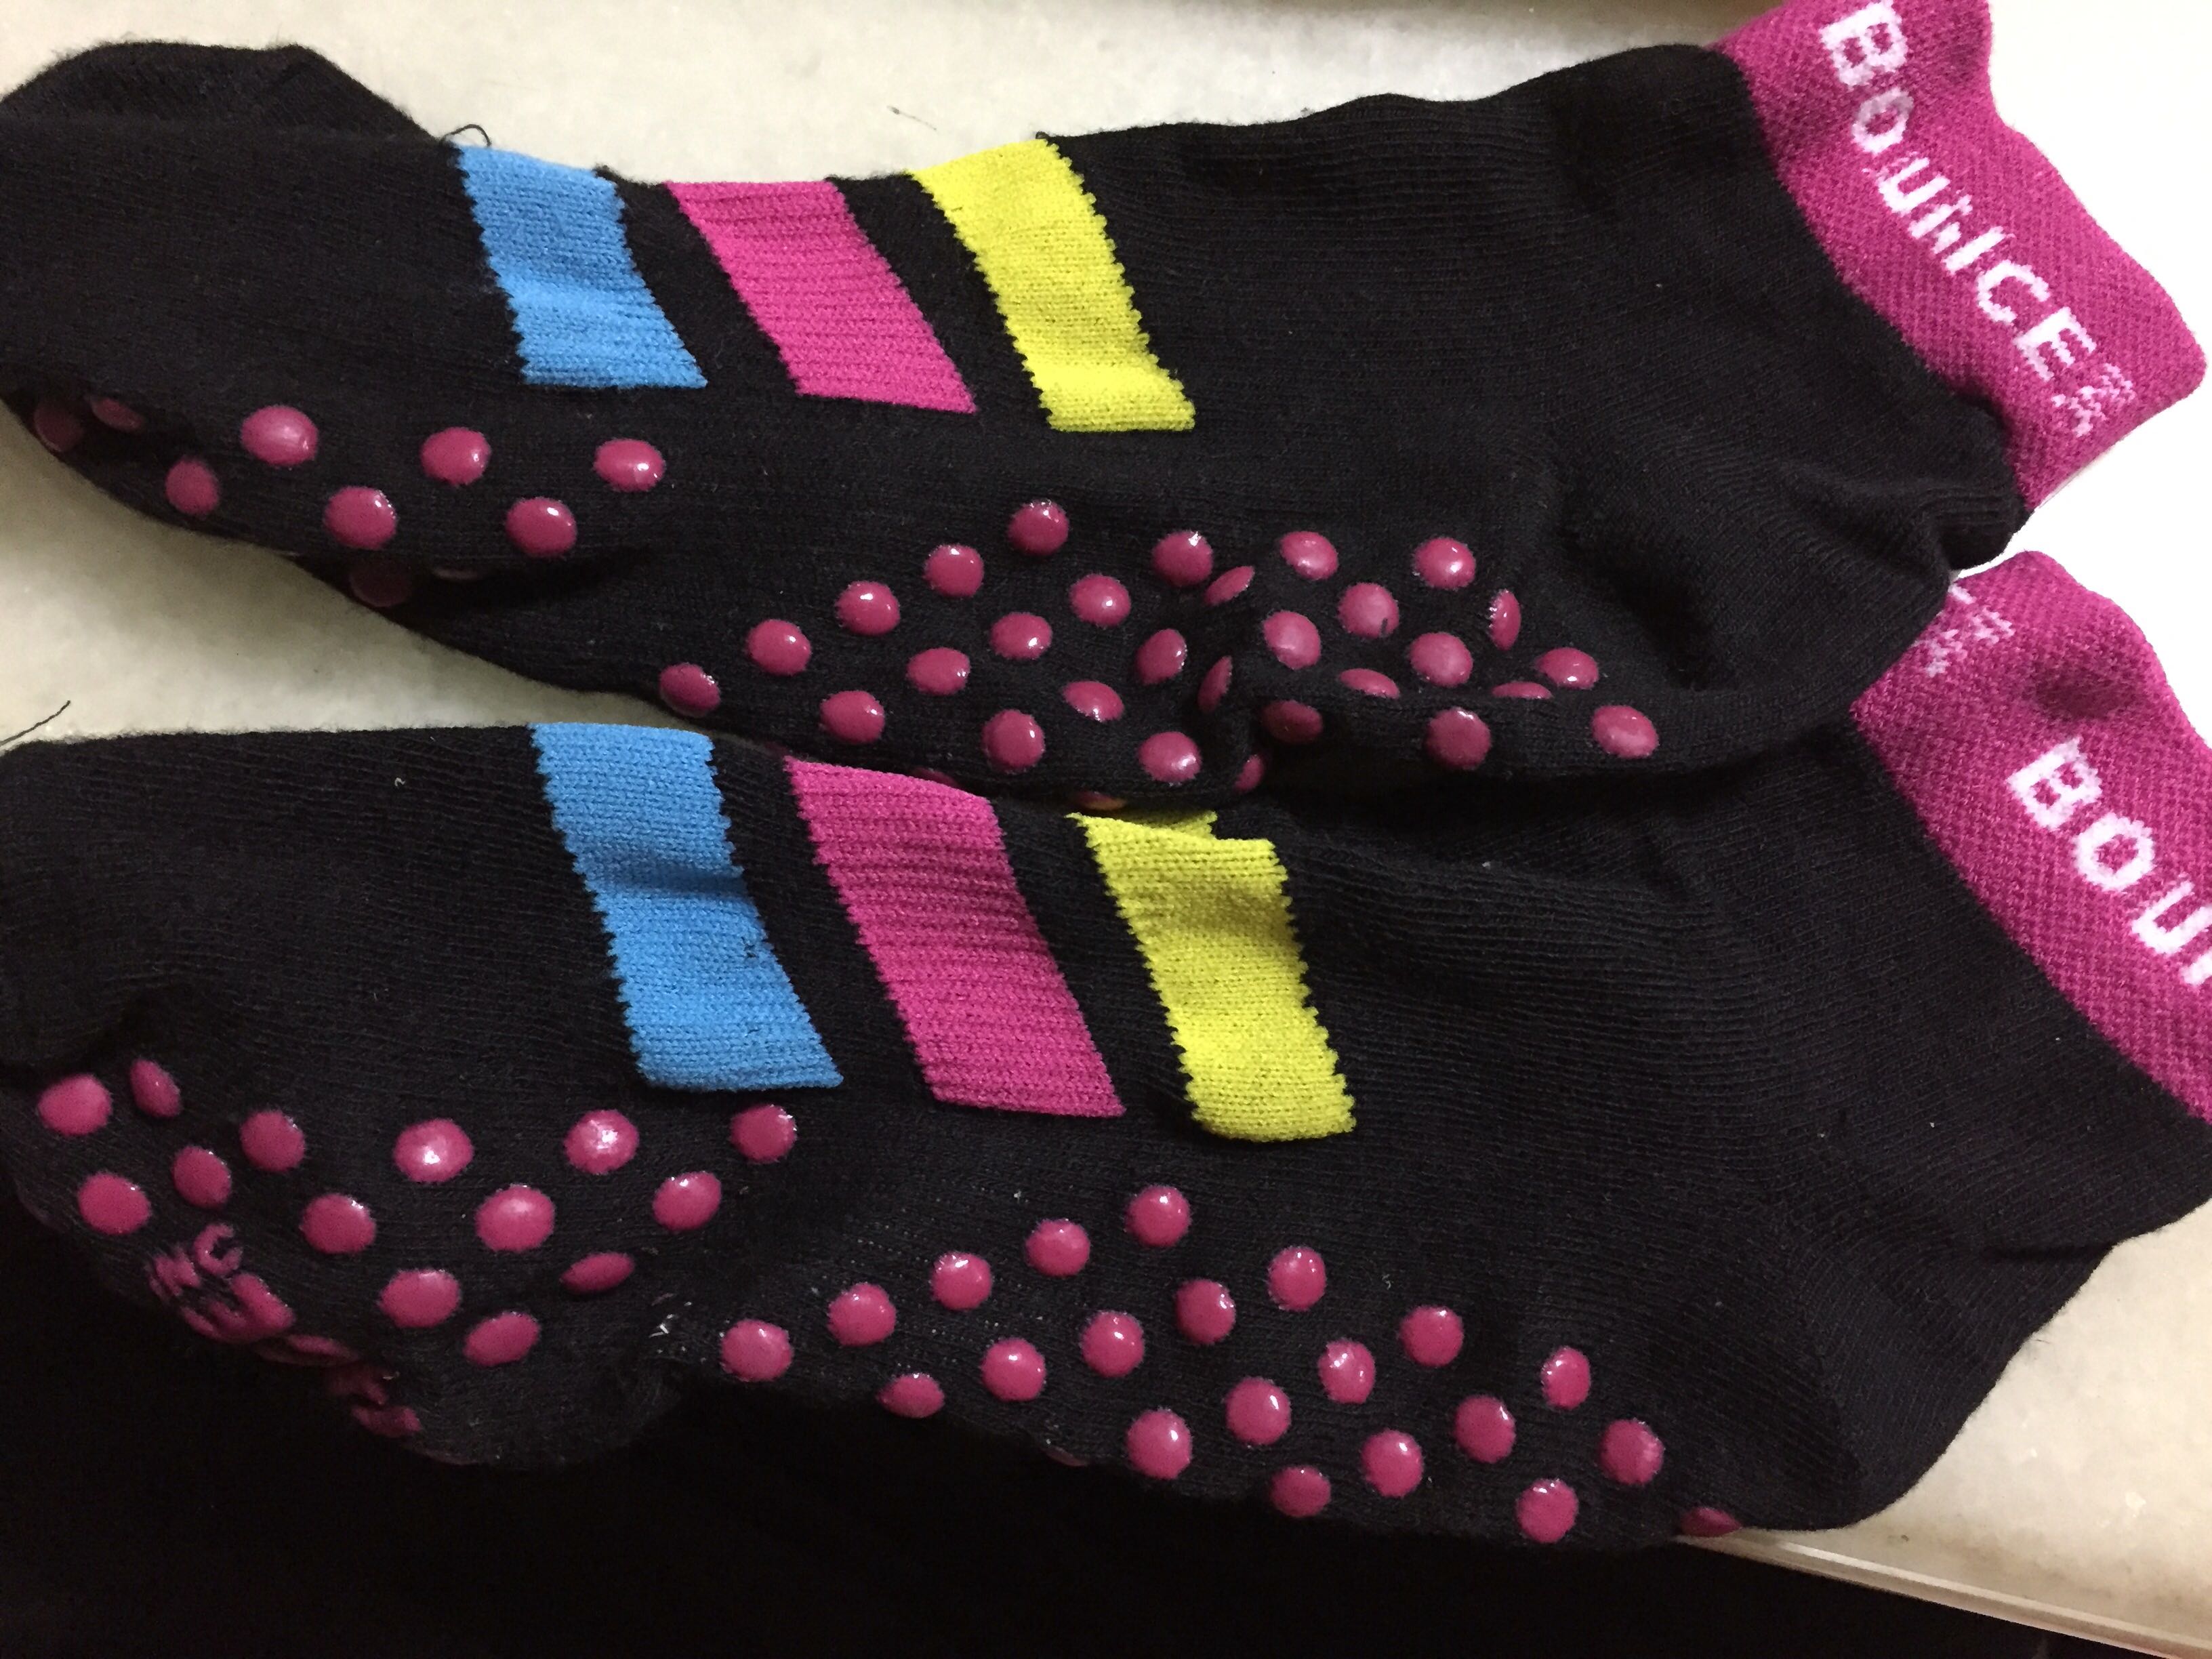 Bounce socks for trampoline park, Sports Equipment, Sports & Games